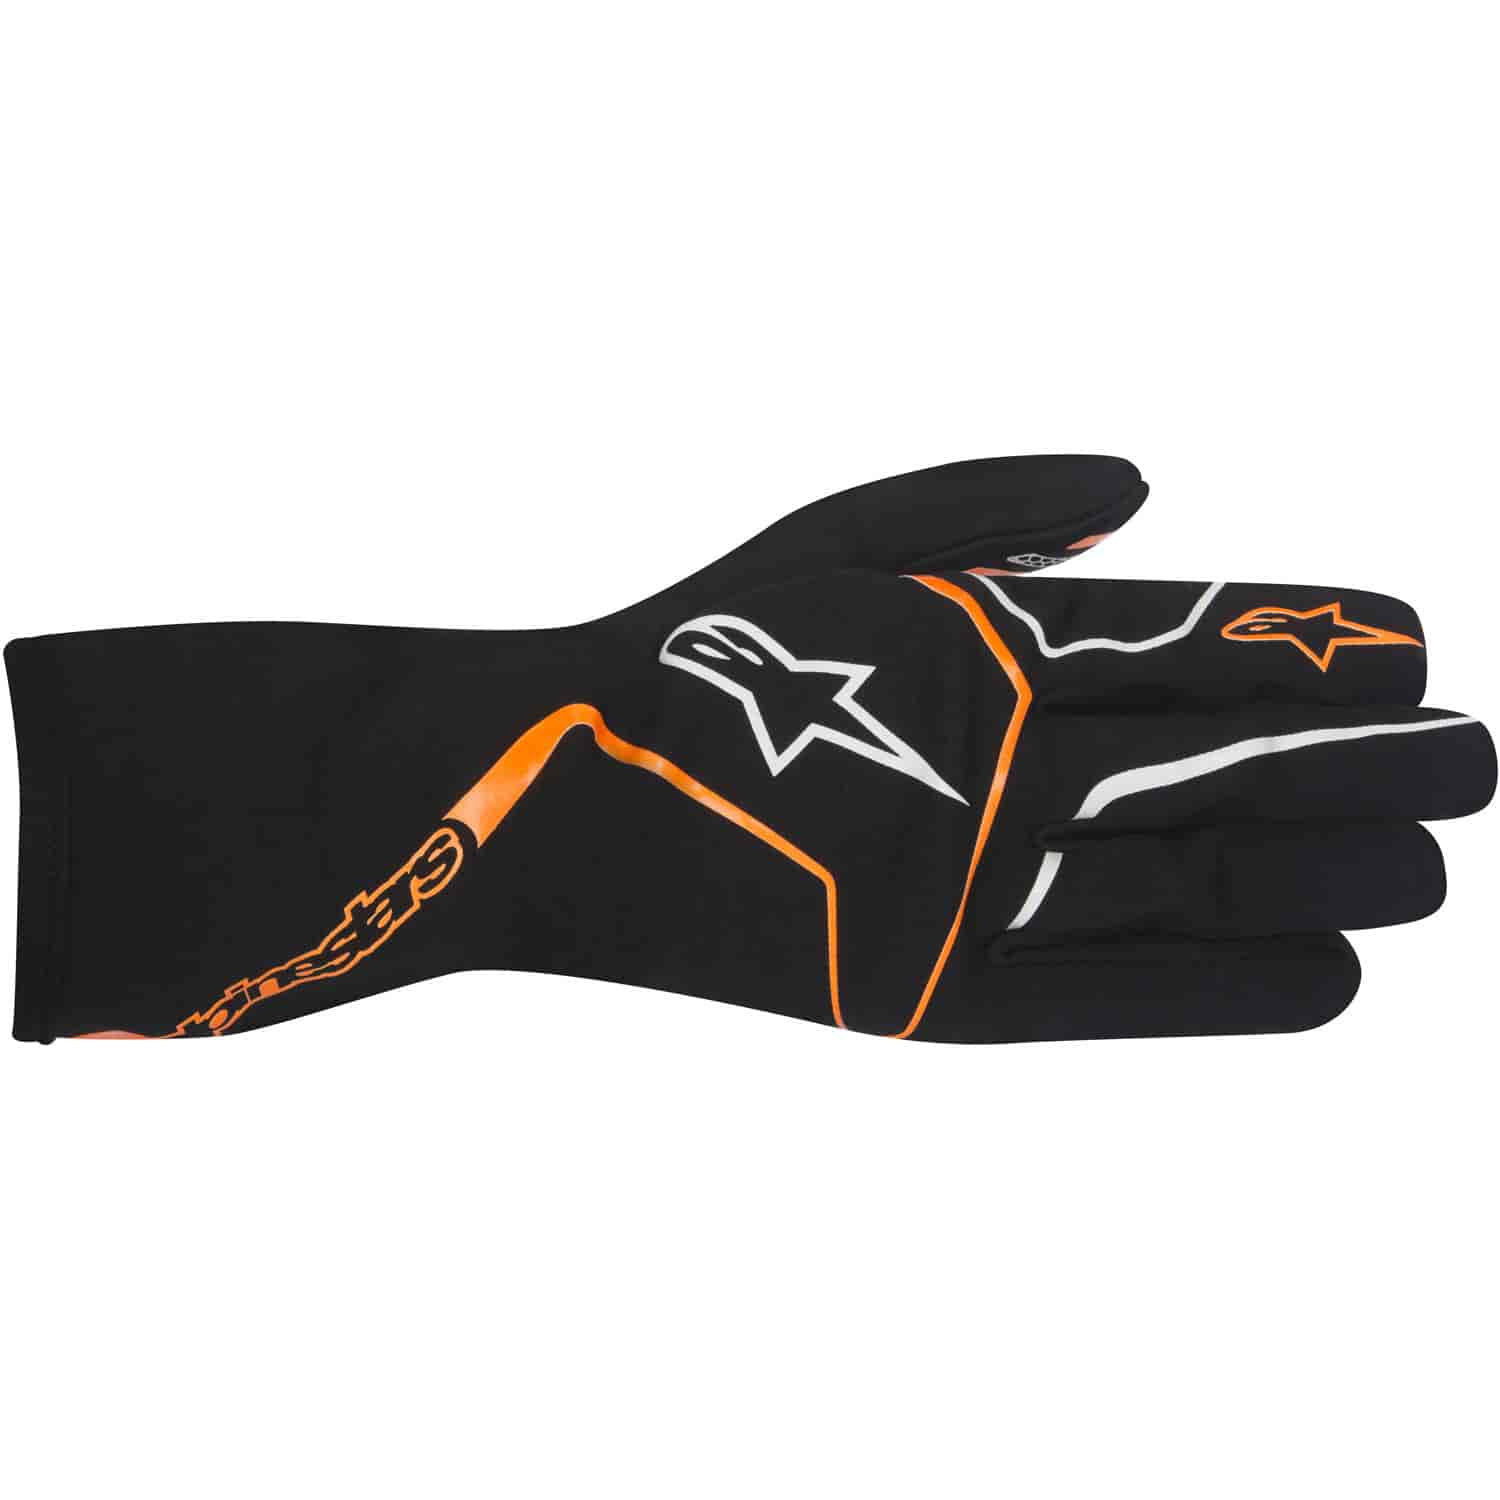 Tech 1-K Race Gloves Black/Orange Fluorescent